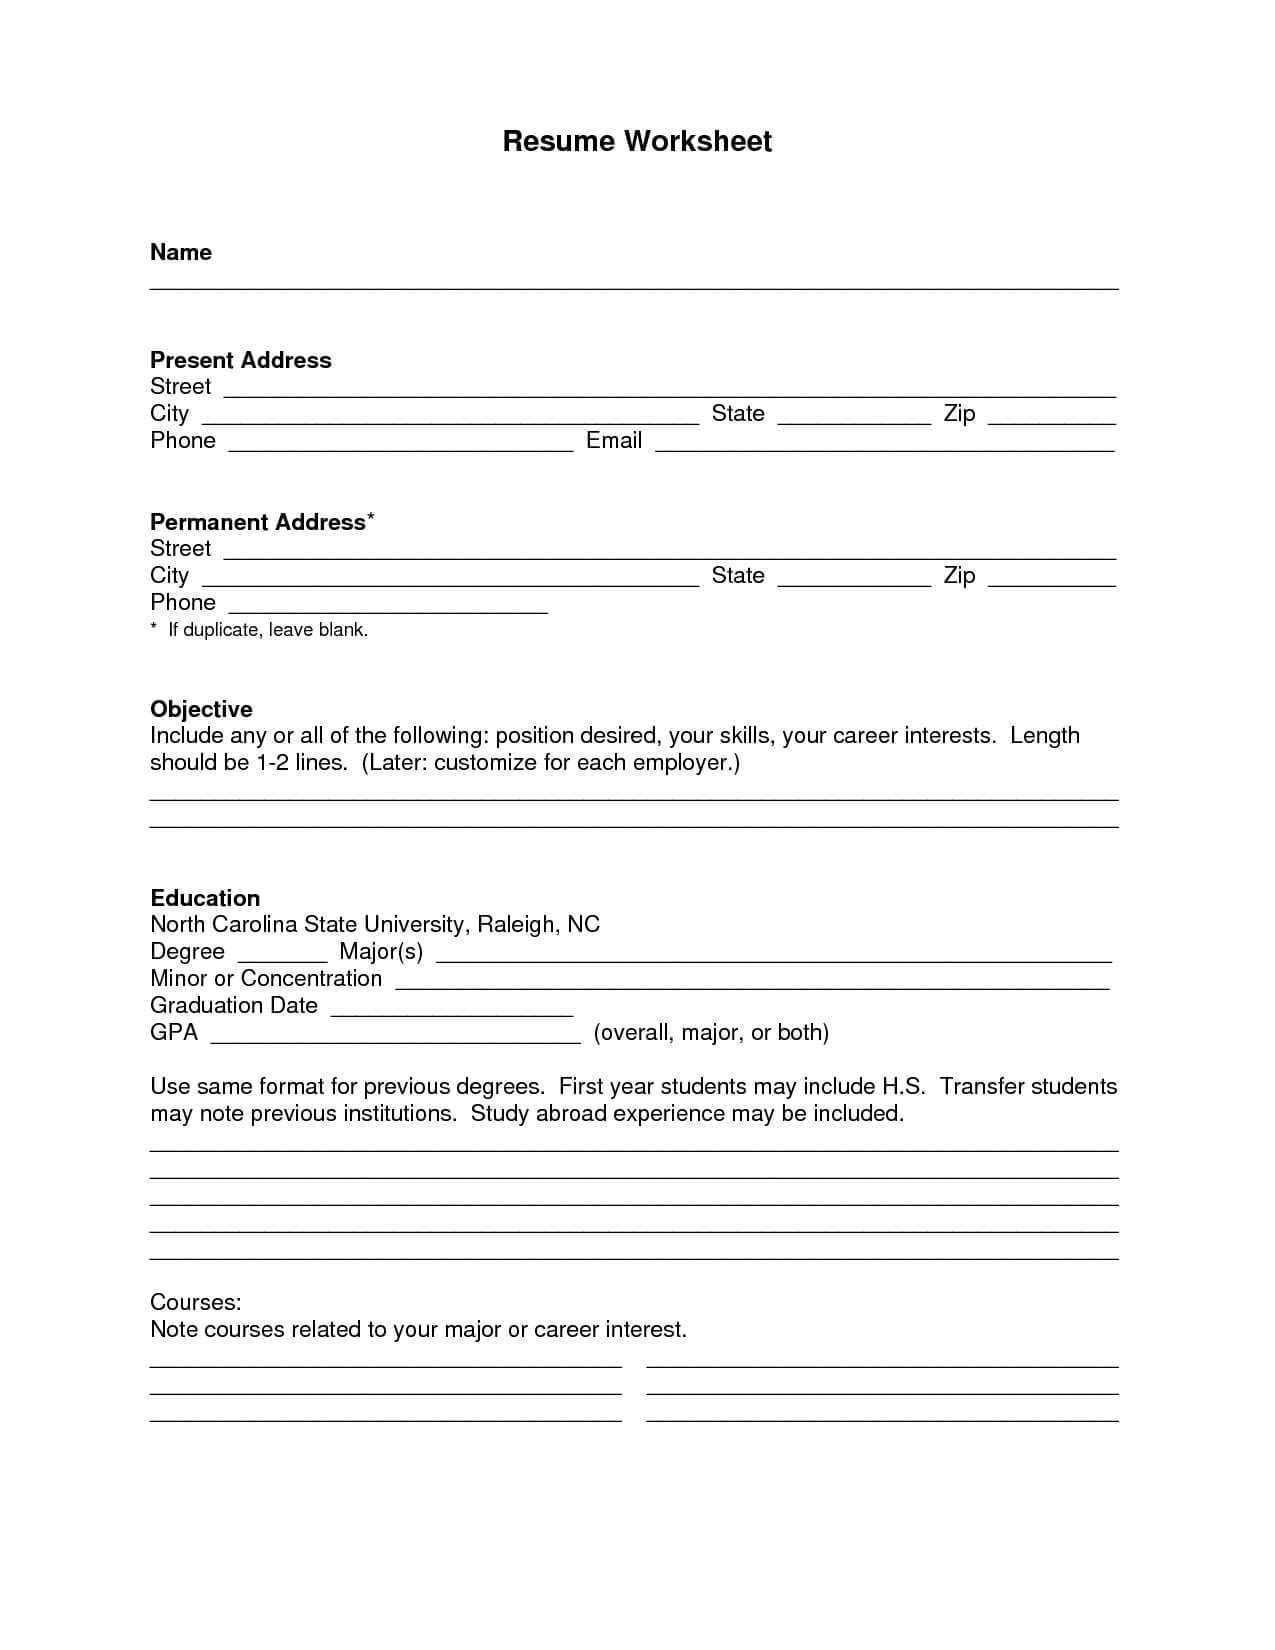 Free Resume Templates Blank | Free Printable Resume In Blank Resume Templates For Microsoft Word